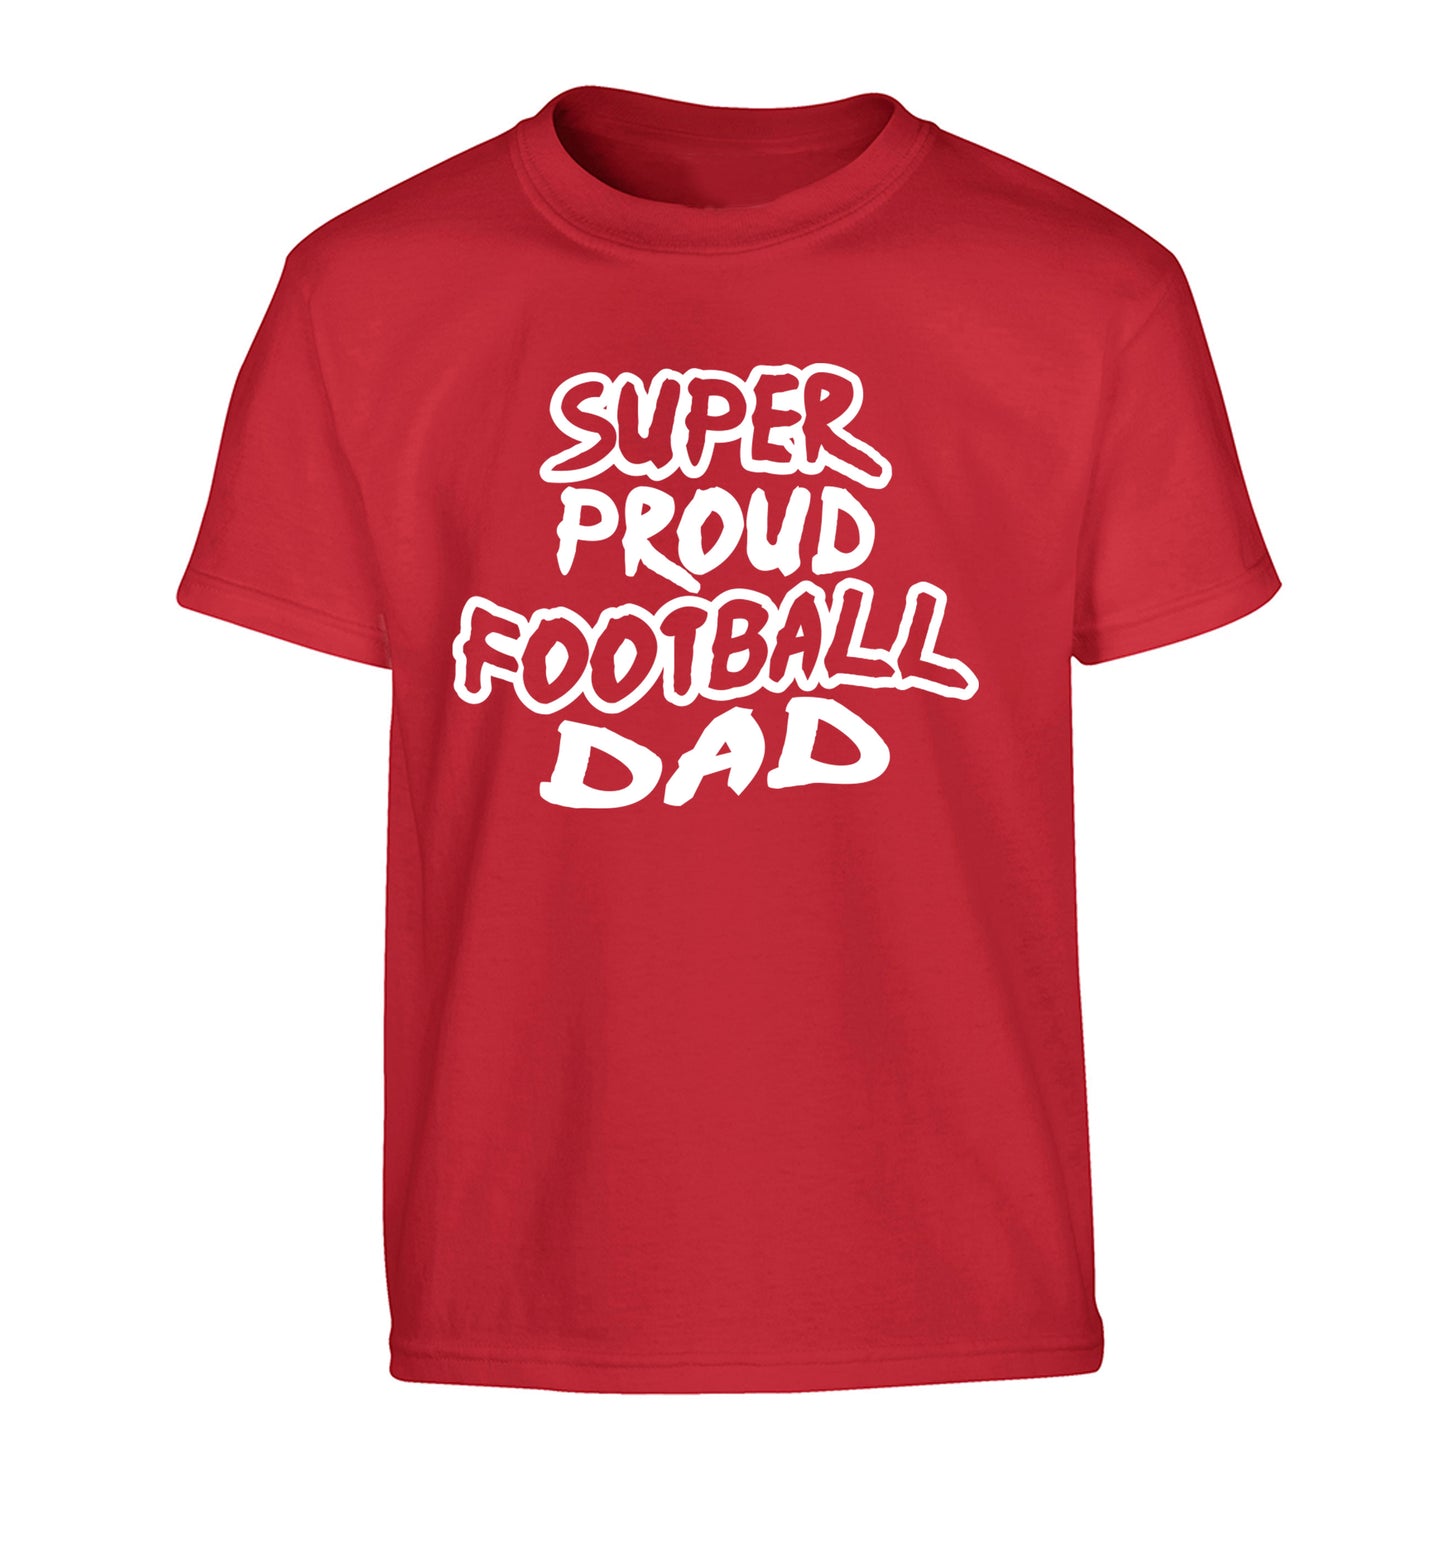 Super proud football dad Children's red Tshirt 12-14 Years